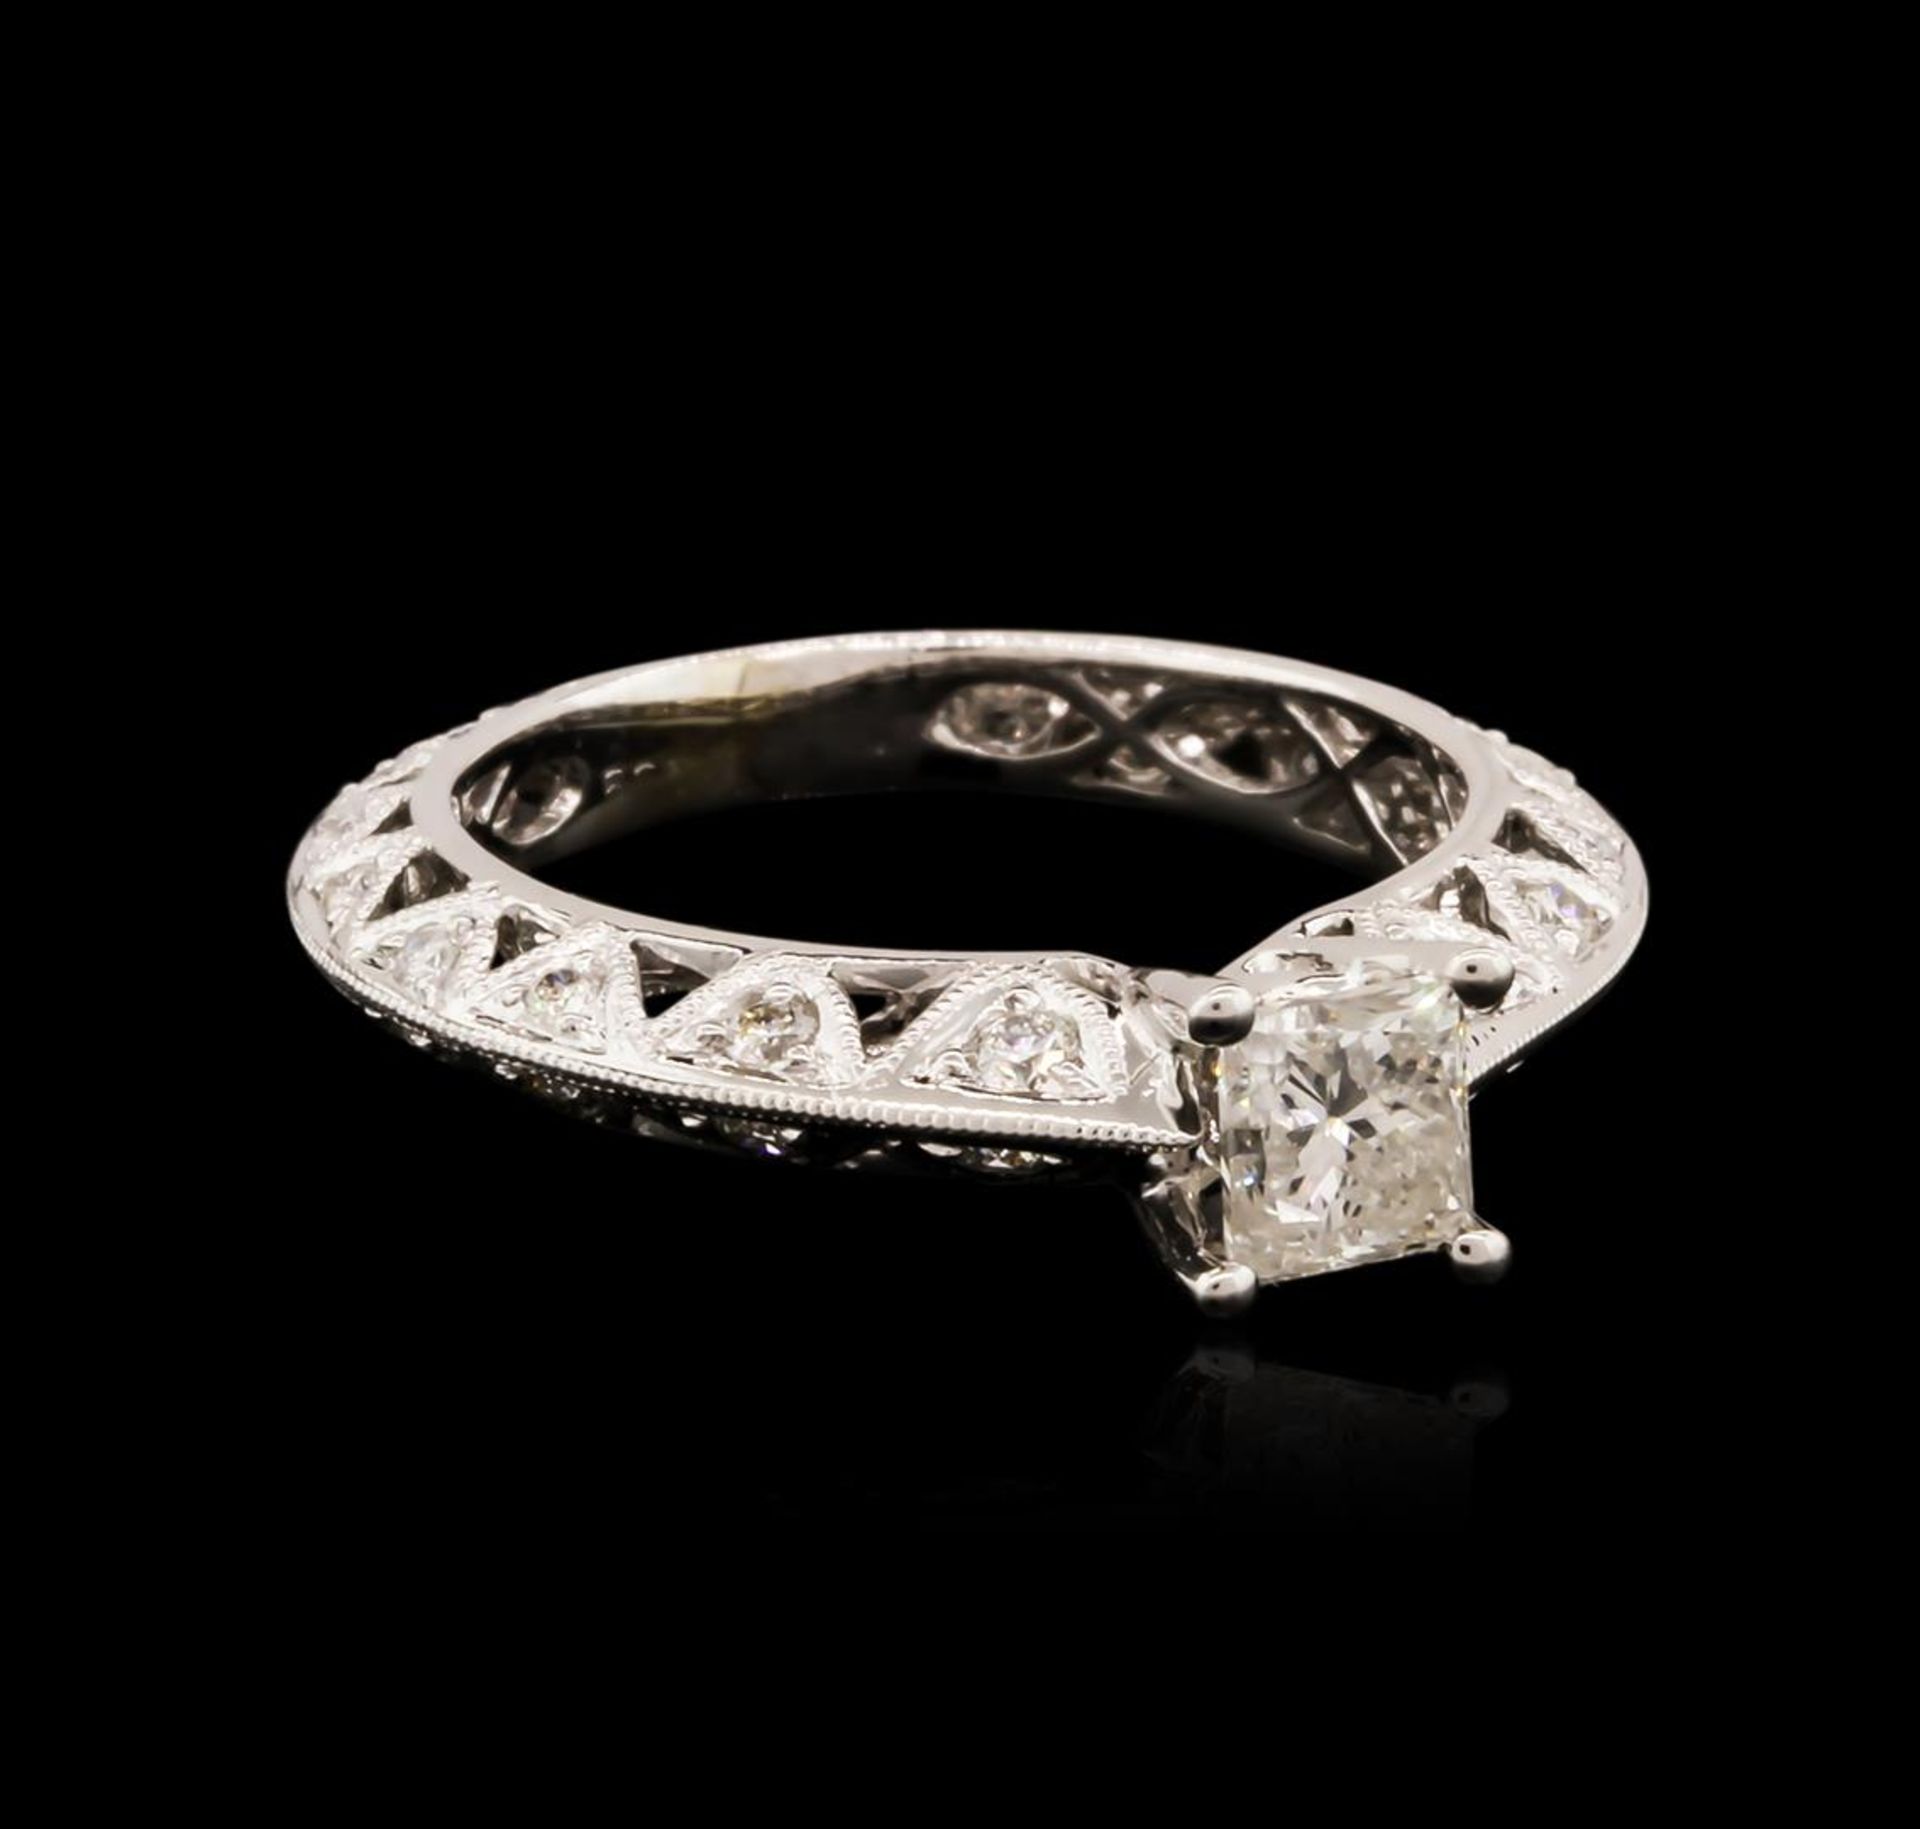 14KT White Gold 0.91 ctw Diamond Ring - Image 2 of 4